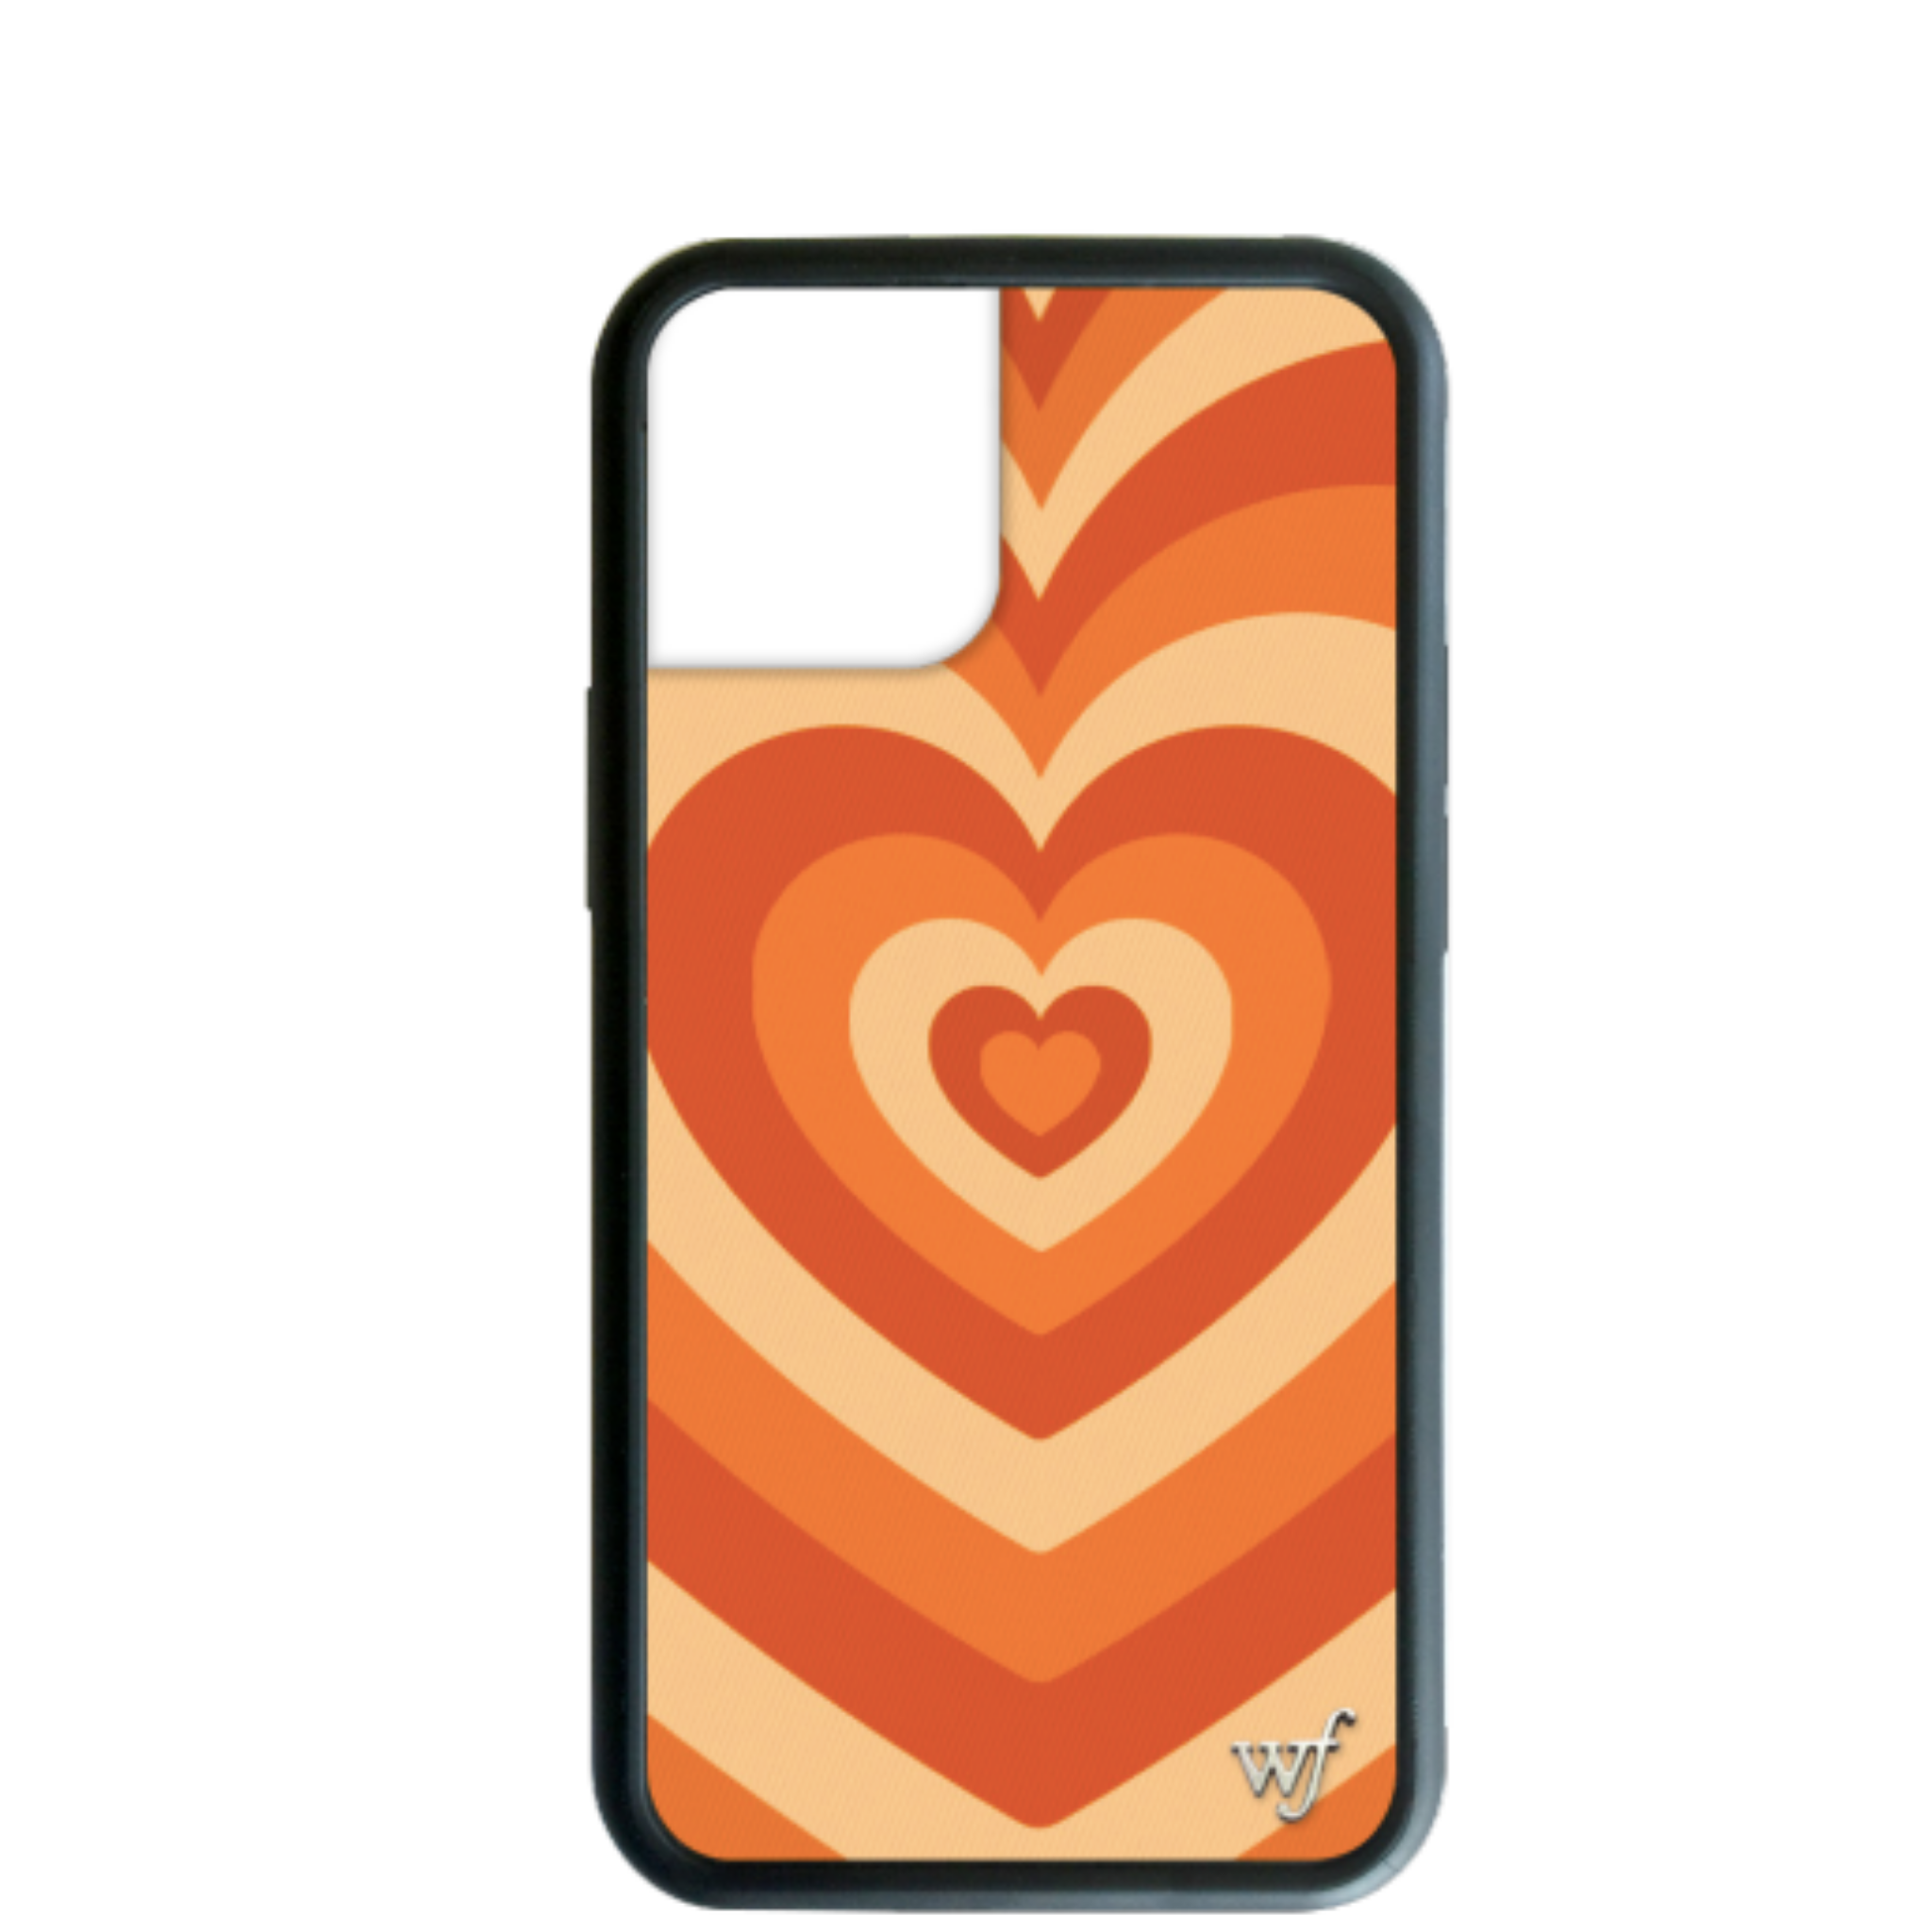 Pumpkin Spice Latte Love iPhone 11 Pro Max Case